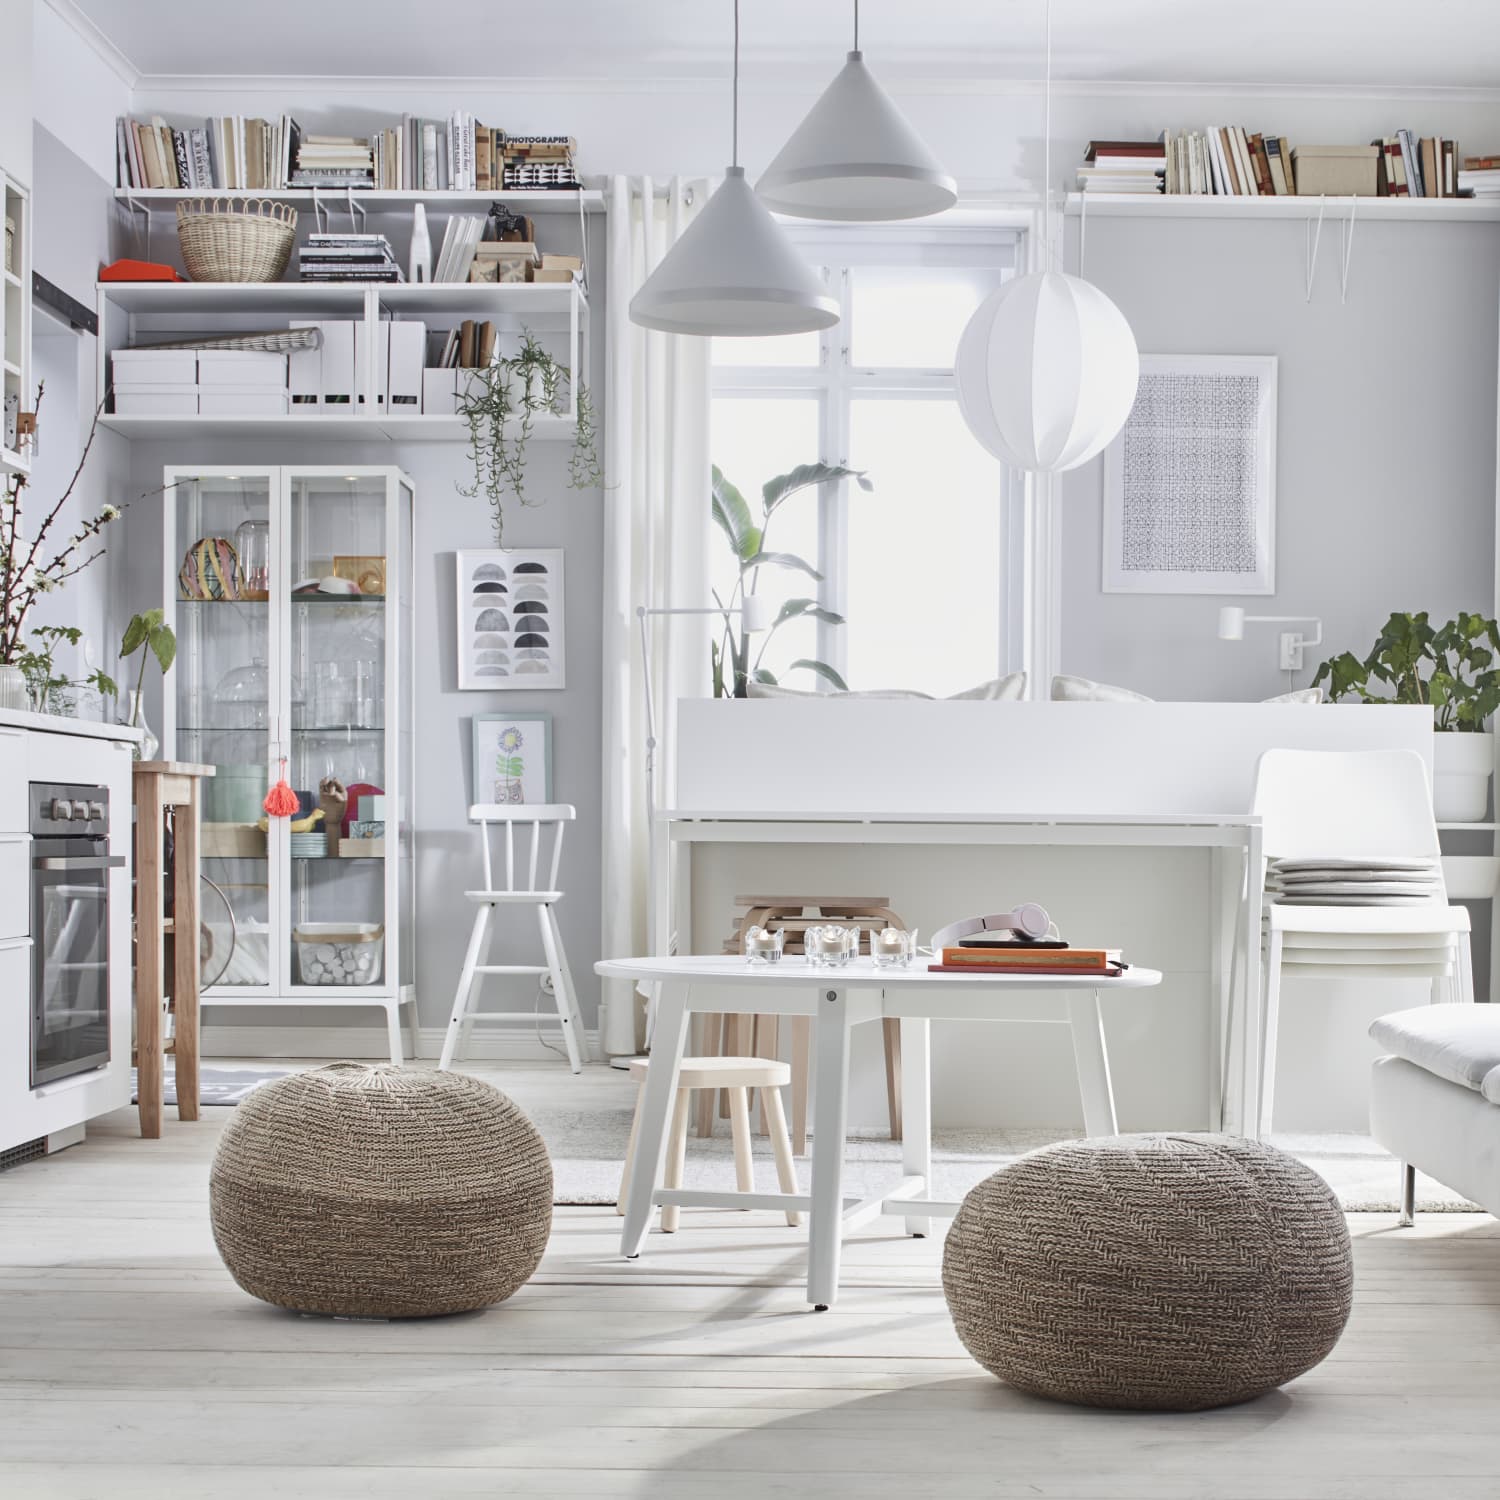 IKEA KITCHEN STORAGE & ORGANIZATION IDEAS ***NEW SMALL SPACE